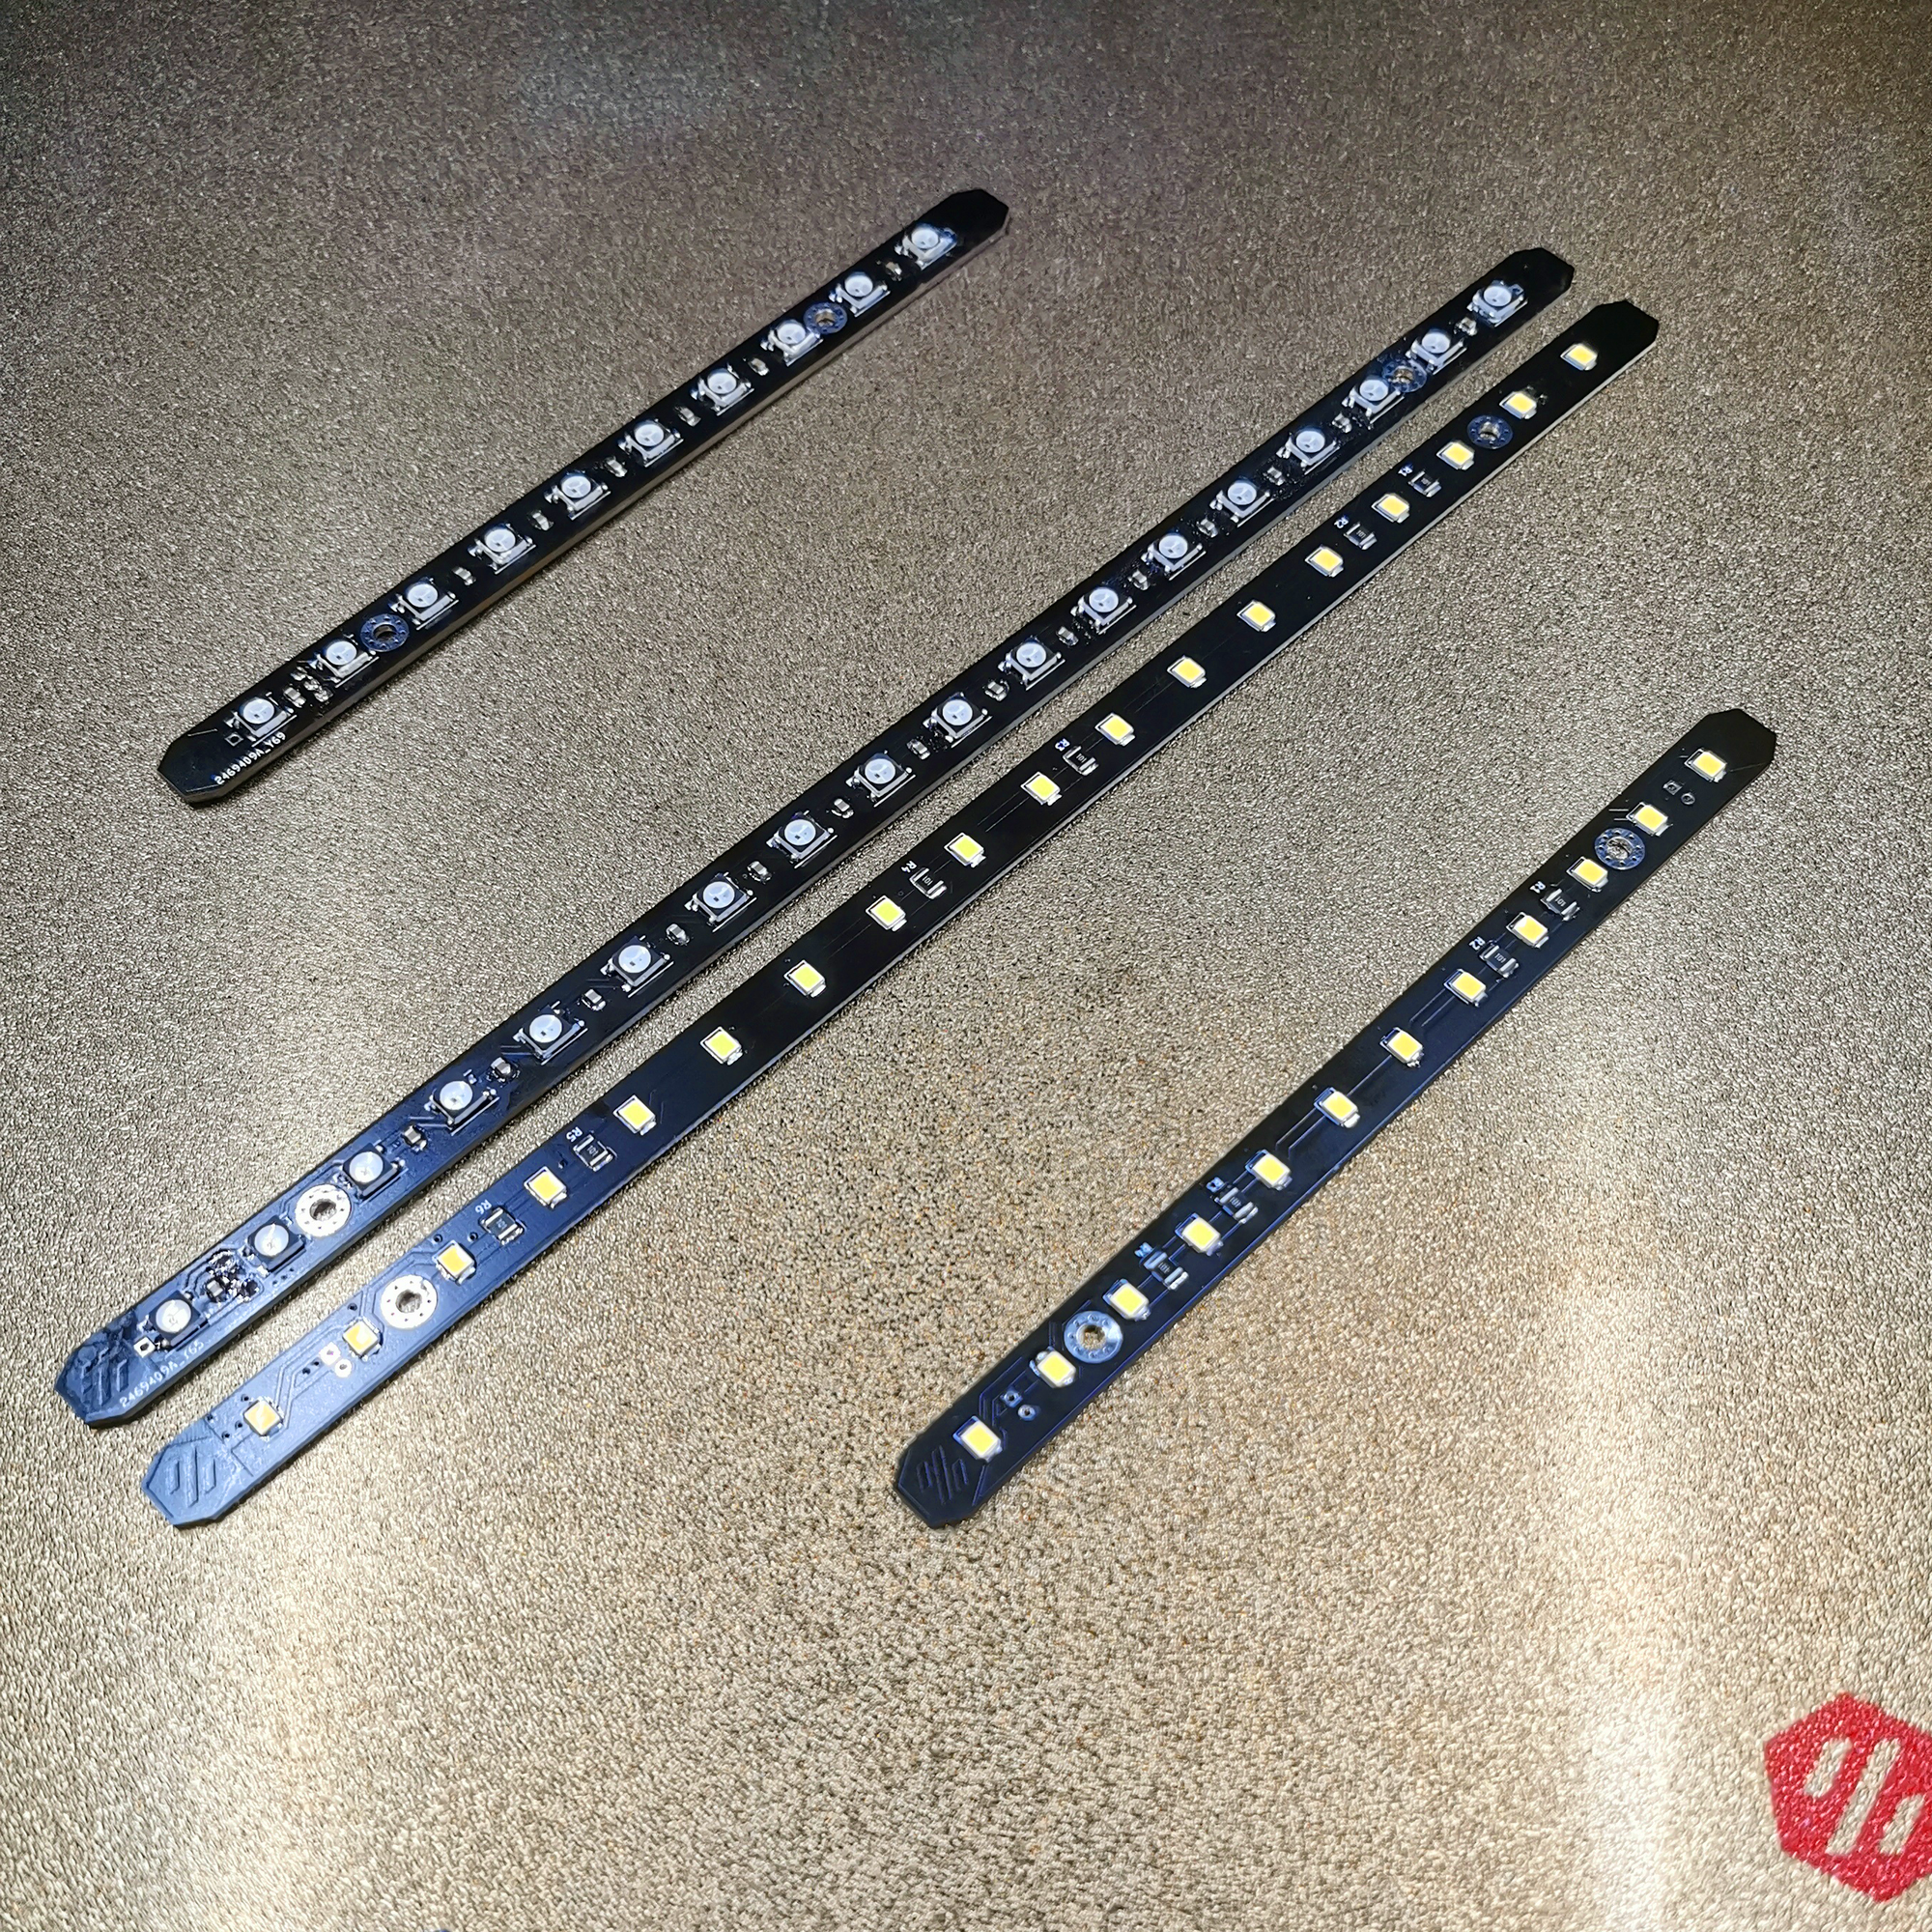 NeoPixel LED Sticks (Disco/Daylight)